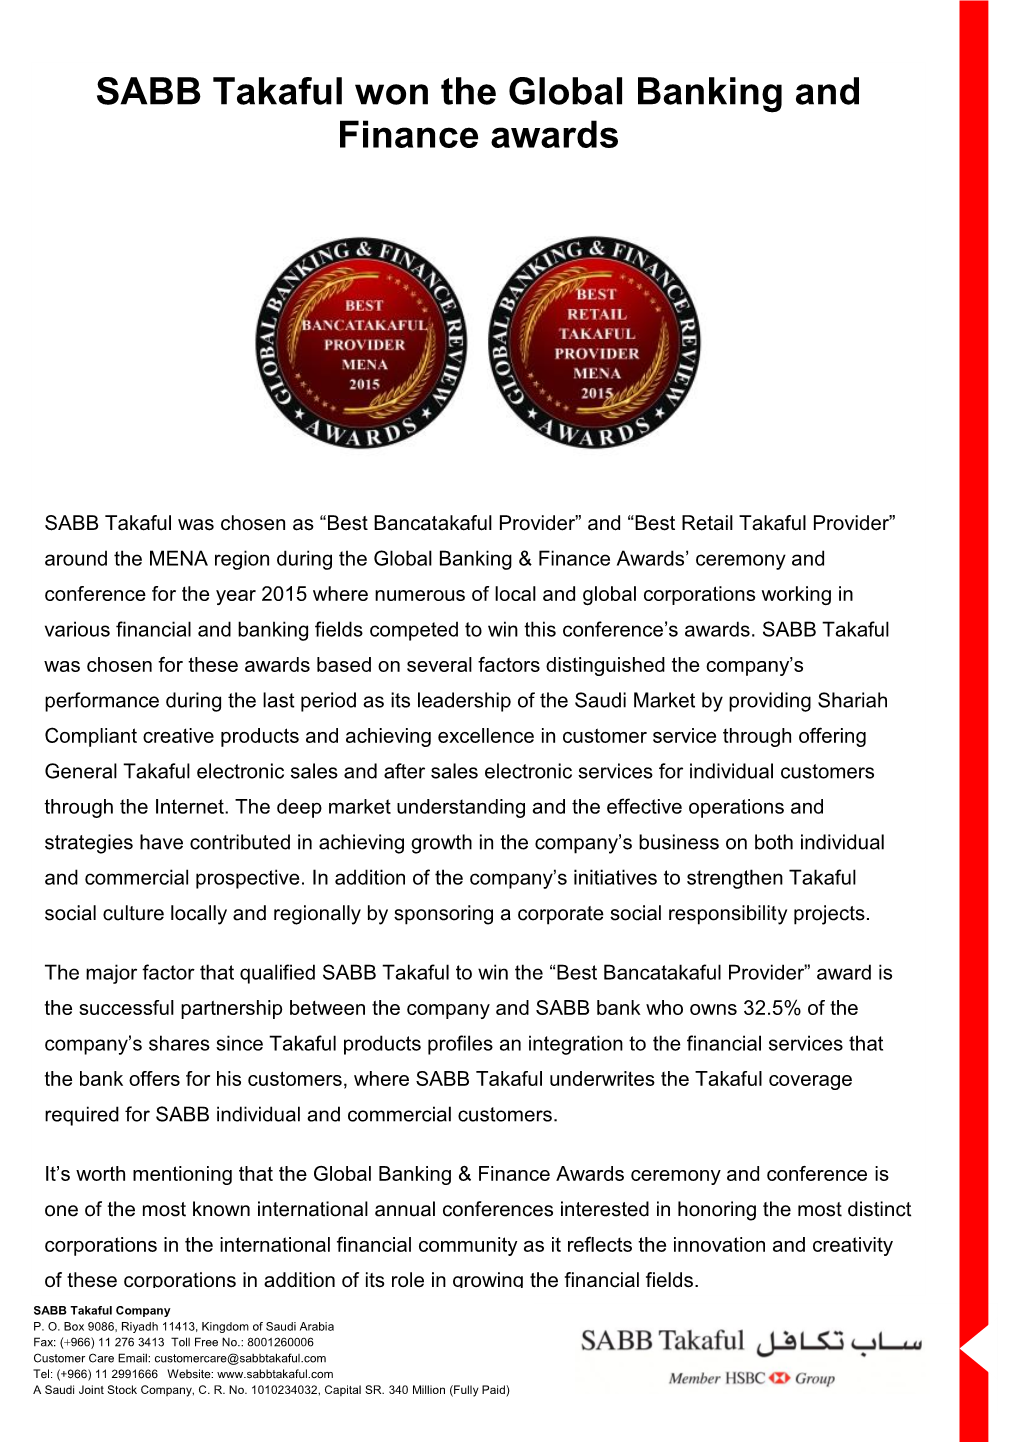 SABB Takaful Won the Global Banking and Finance Awards